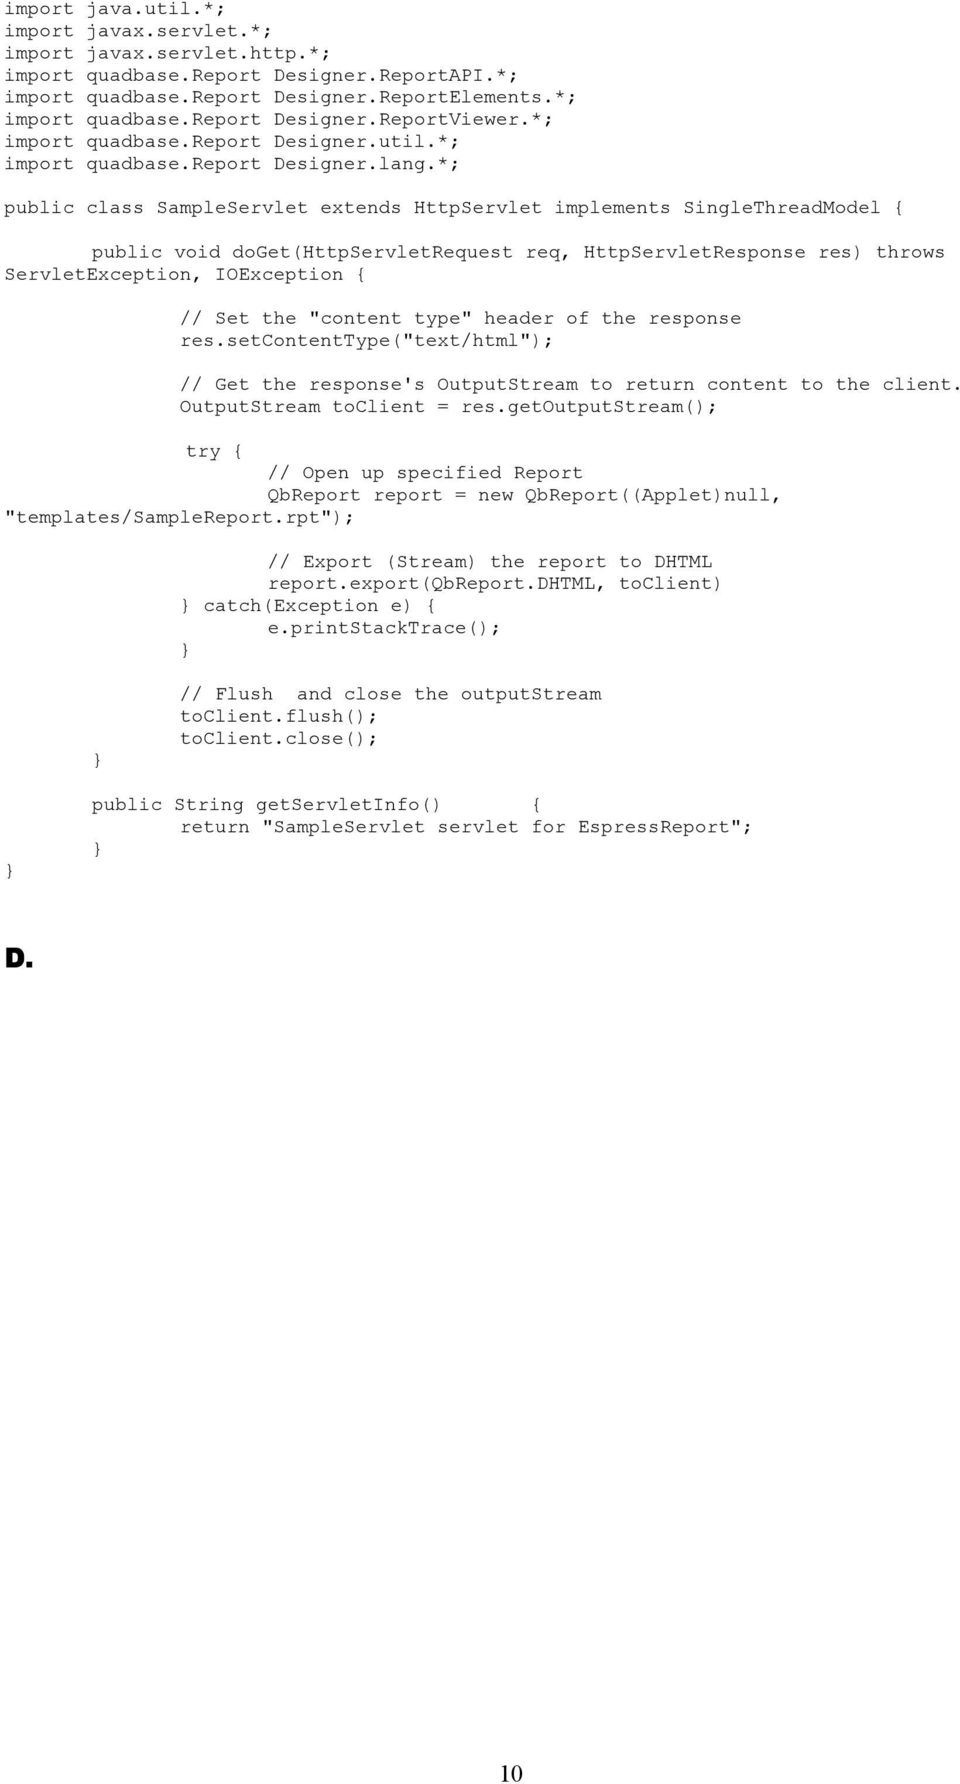 *; public class SampleServlet extends HttpServlet implements SingleThreadModel { public void doget(httpservletrequest req, HttpServletResponse res) throws ServletException, IOException { // Set the